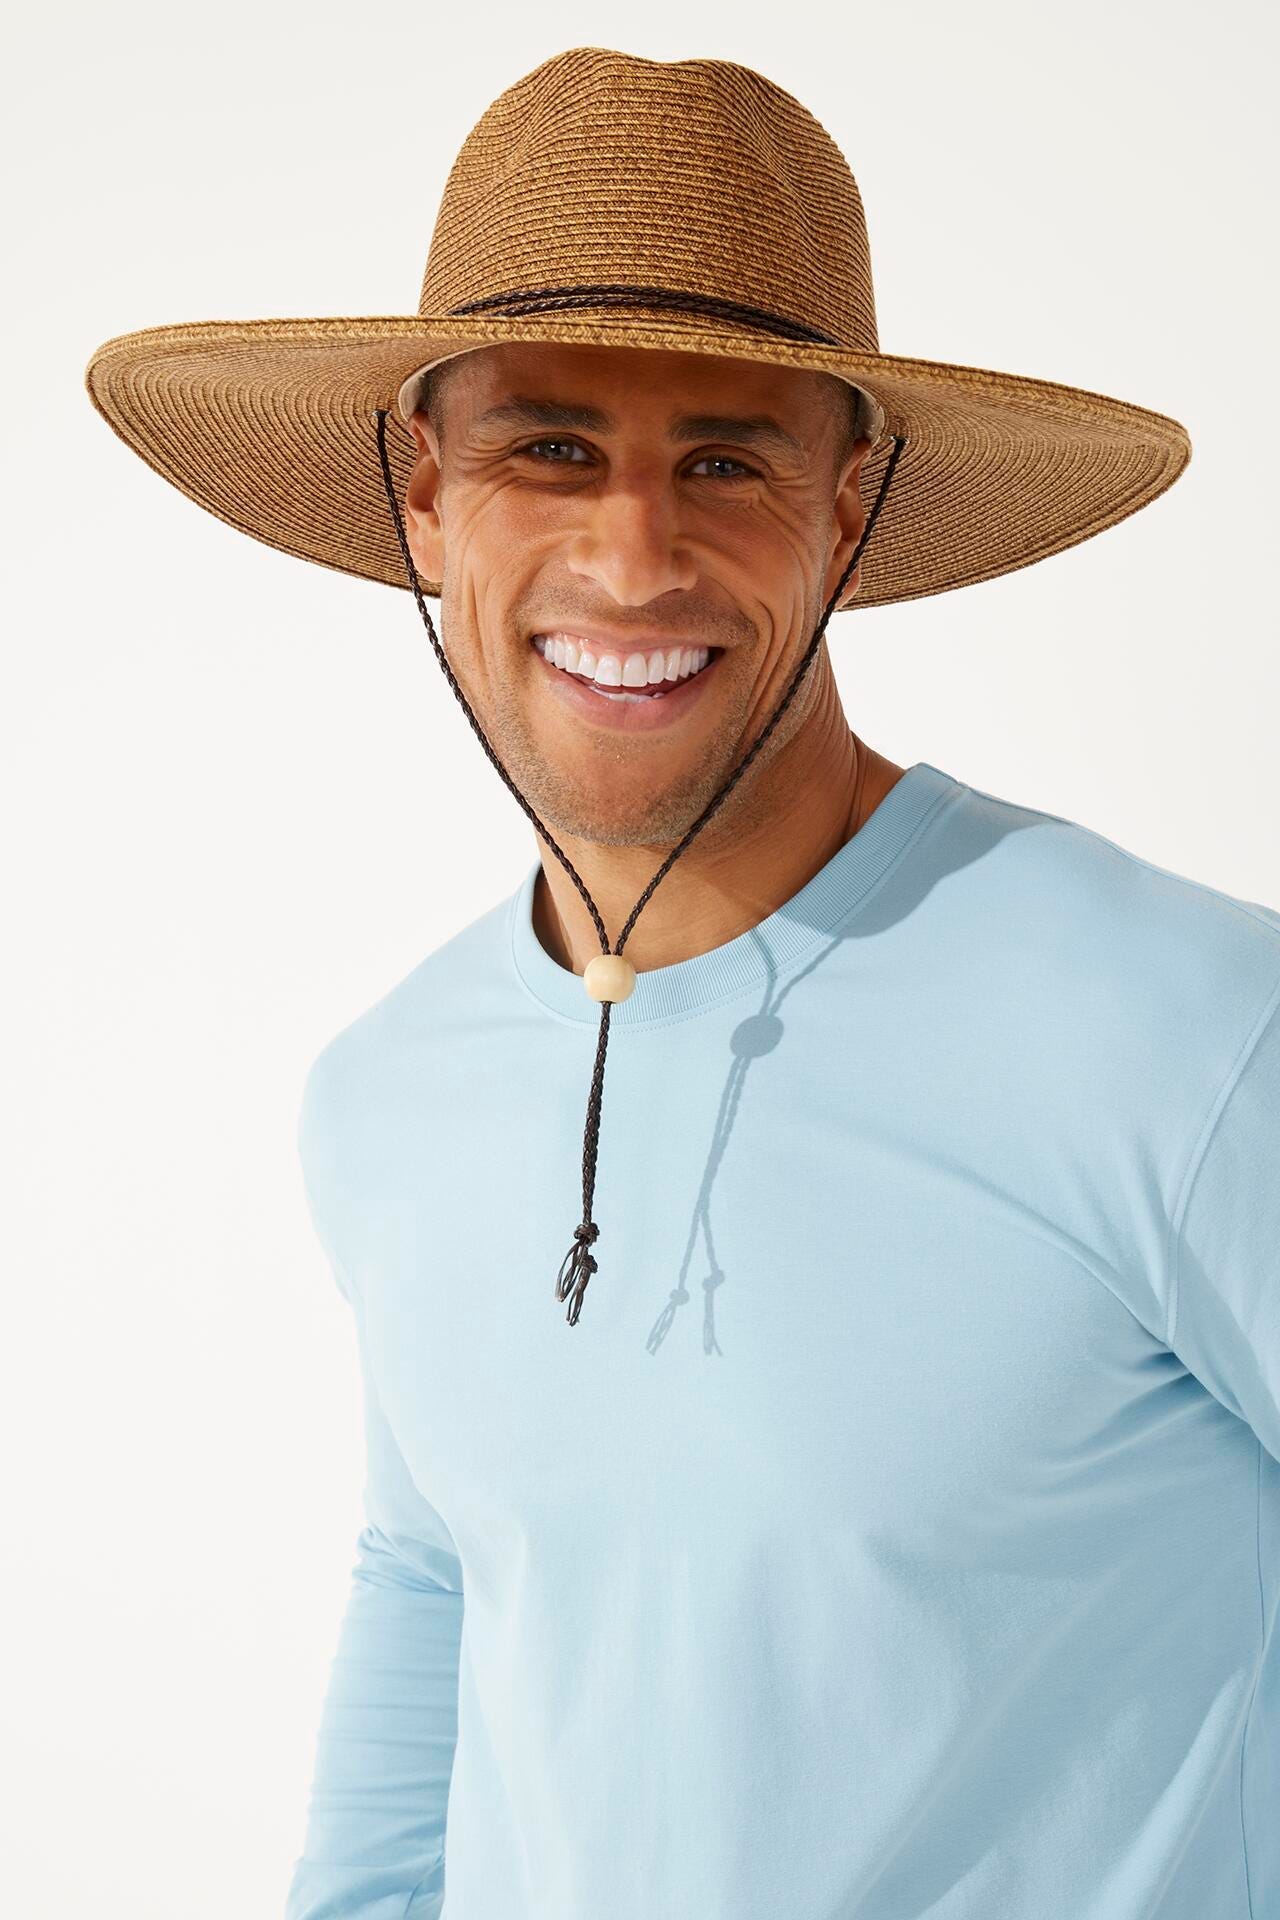 Odeerbi Hawaii Beach Hats for Men Women Reversible Bucket Hat for Sun Protection Sun Hat Leaves Printing Fisherman Hats Wear Outdoor Sunscreen Light